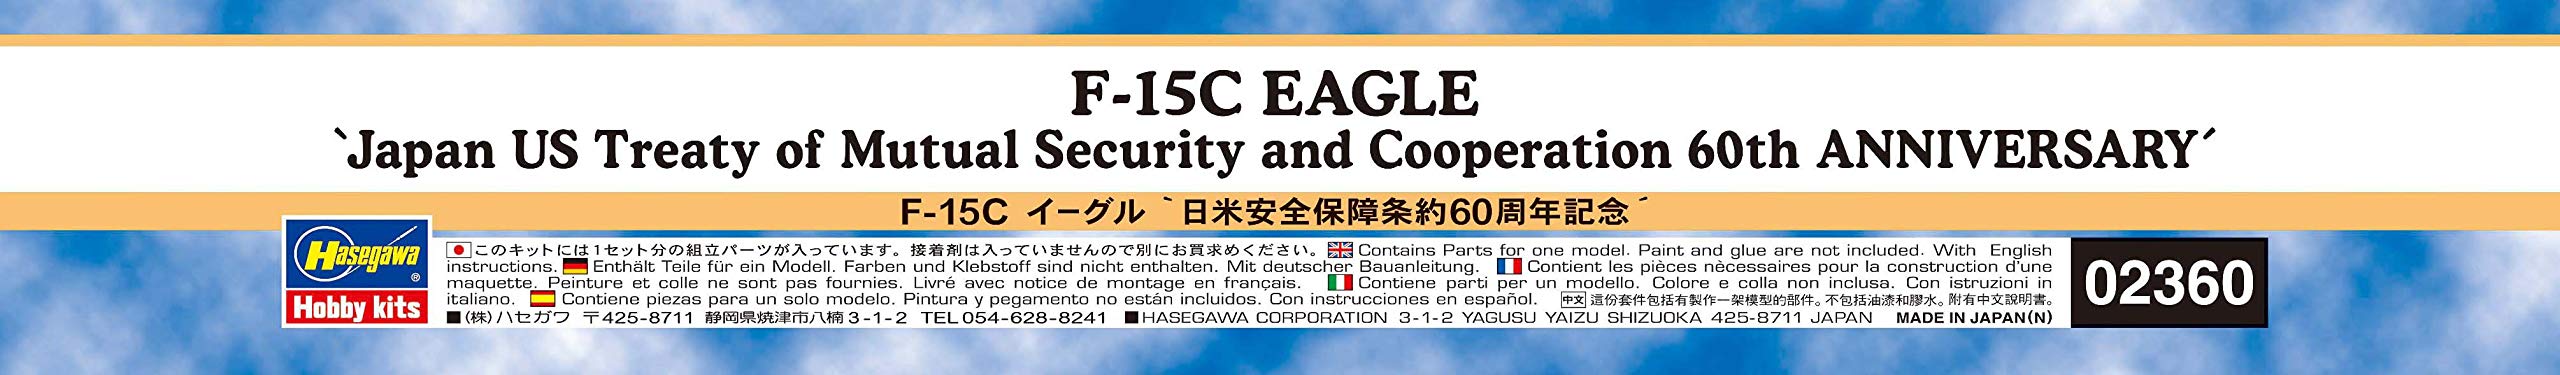 HASEGAWA 1/72 F-15C Eagle 'Japan-Us Security Treaty 60 Year Anniversary' Plastic Model